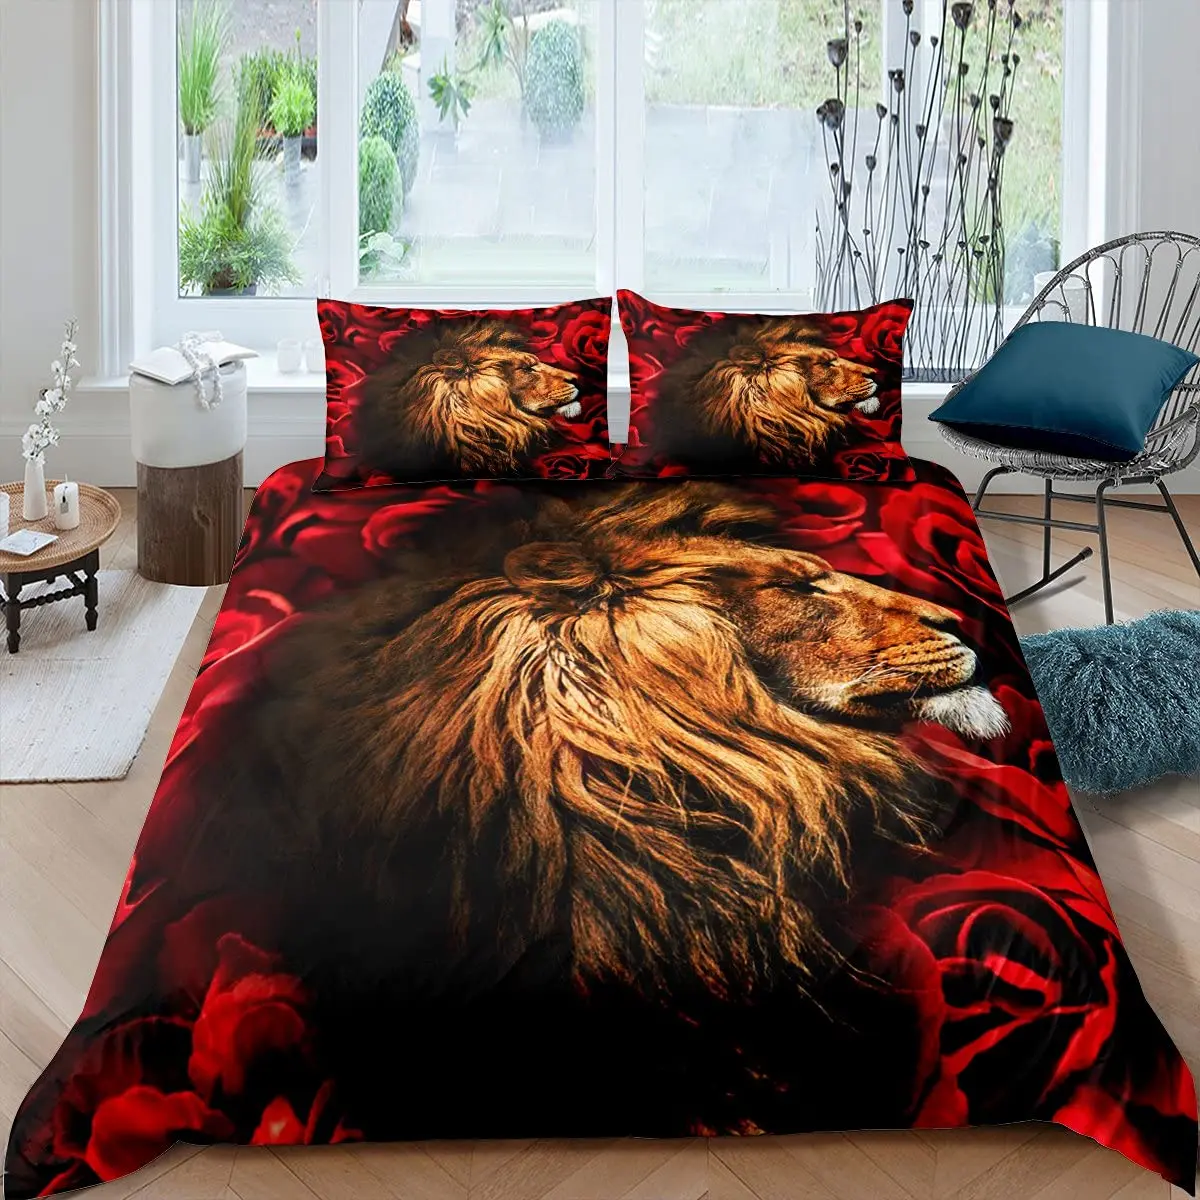 

Lion Duvet Cover Set Microfiber Couple Bedding Set for Boys Teens 3D Animal Print Cover African Wildlife Quilt Cover Comforter